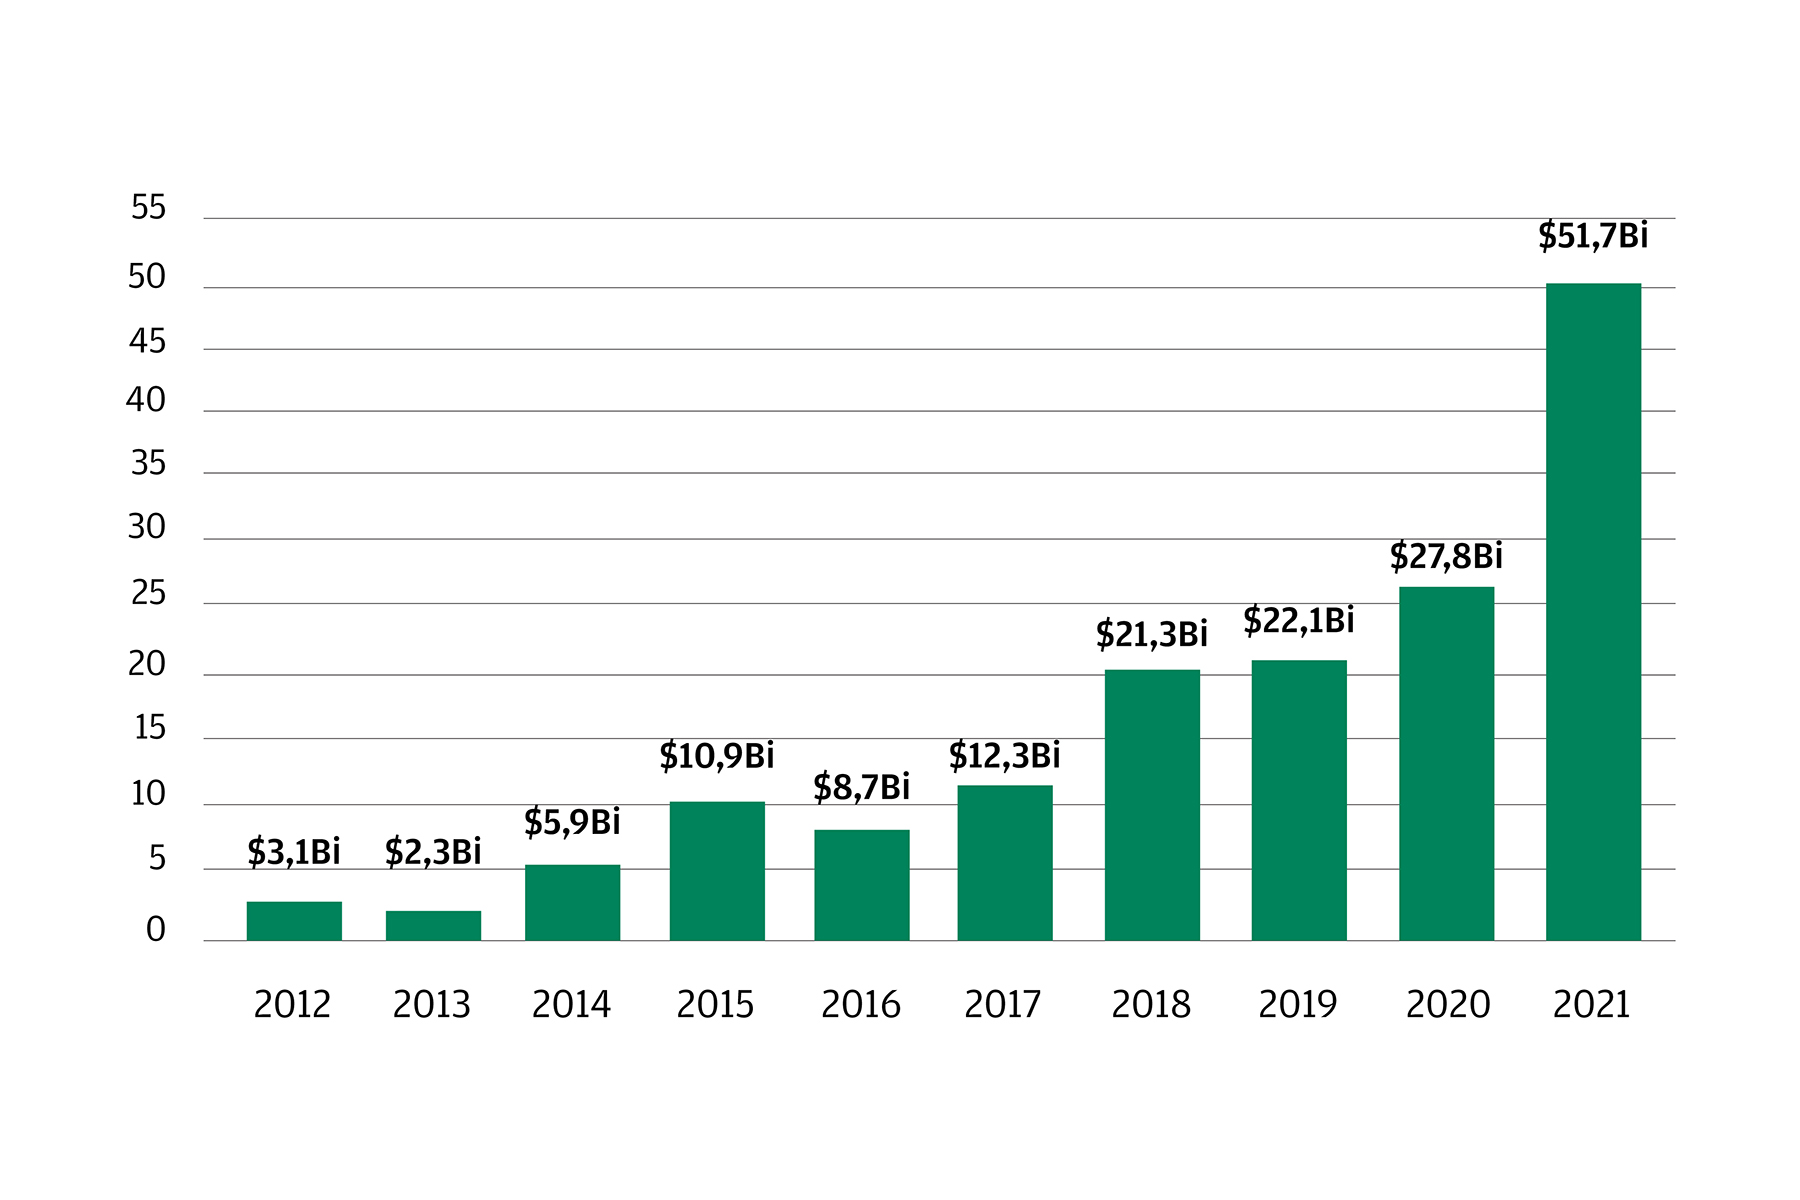 Este gráfico descreve os financiamentos anuais da tecnologia agroalimentar de 2012 a 2021.